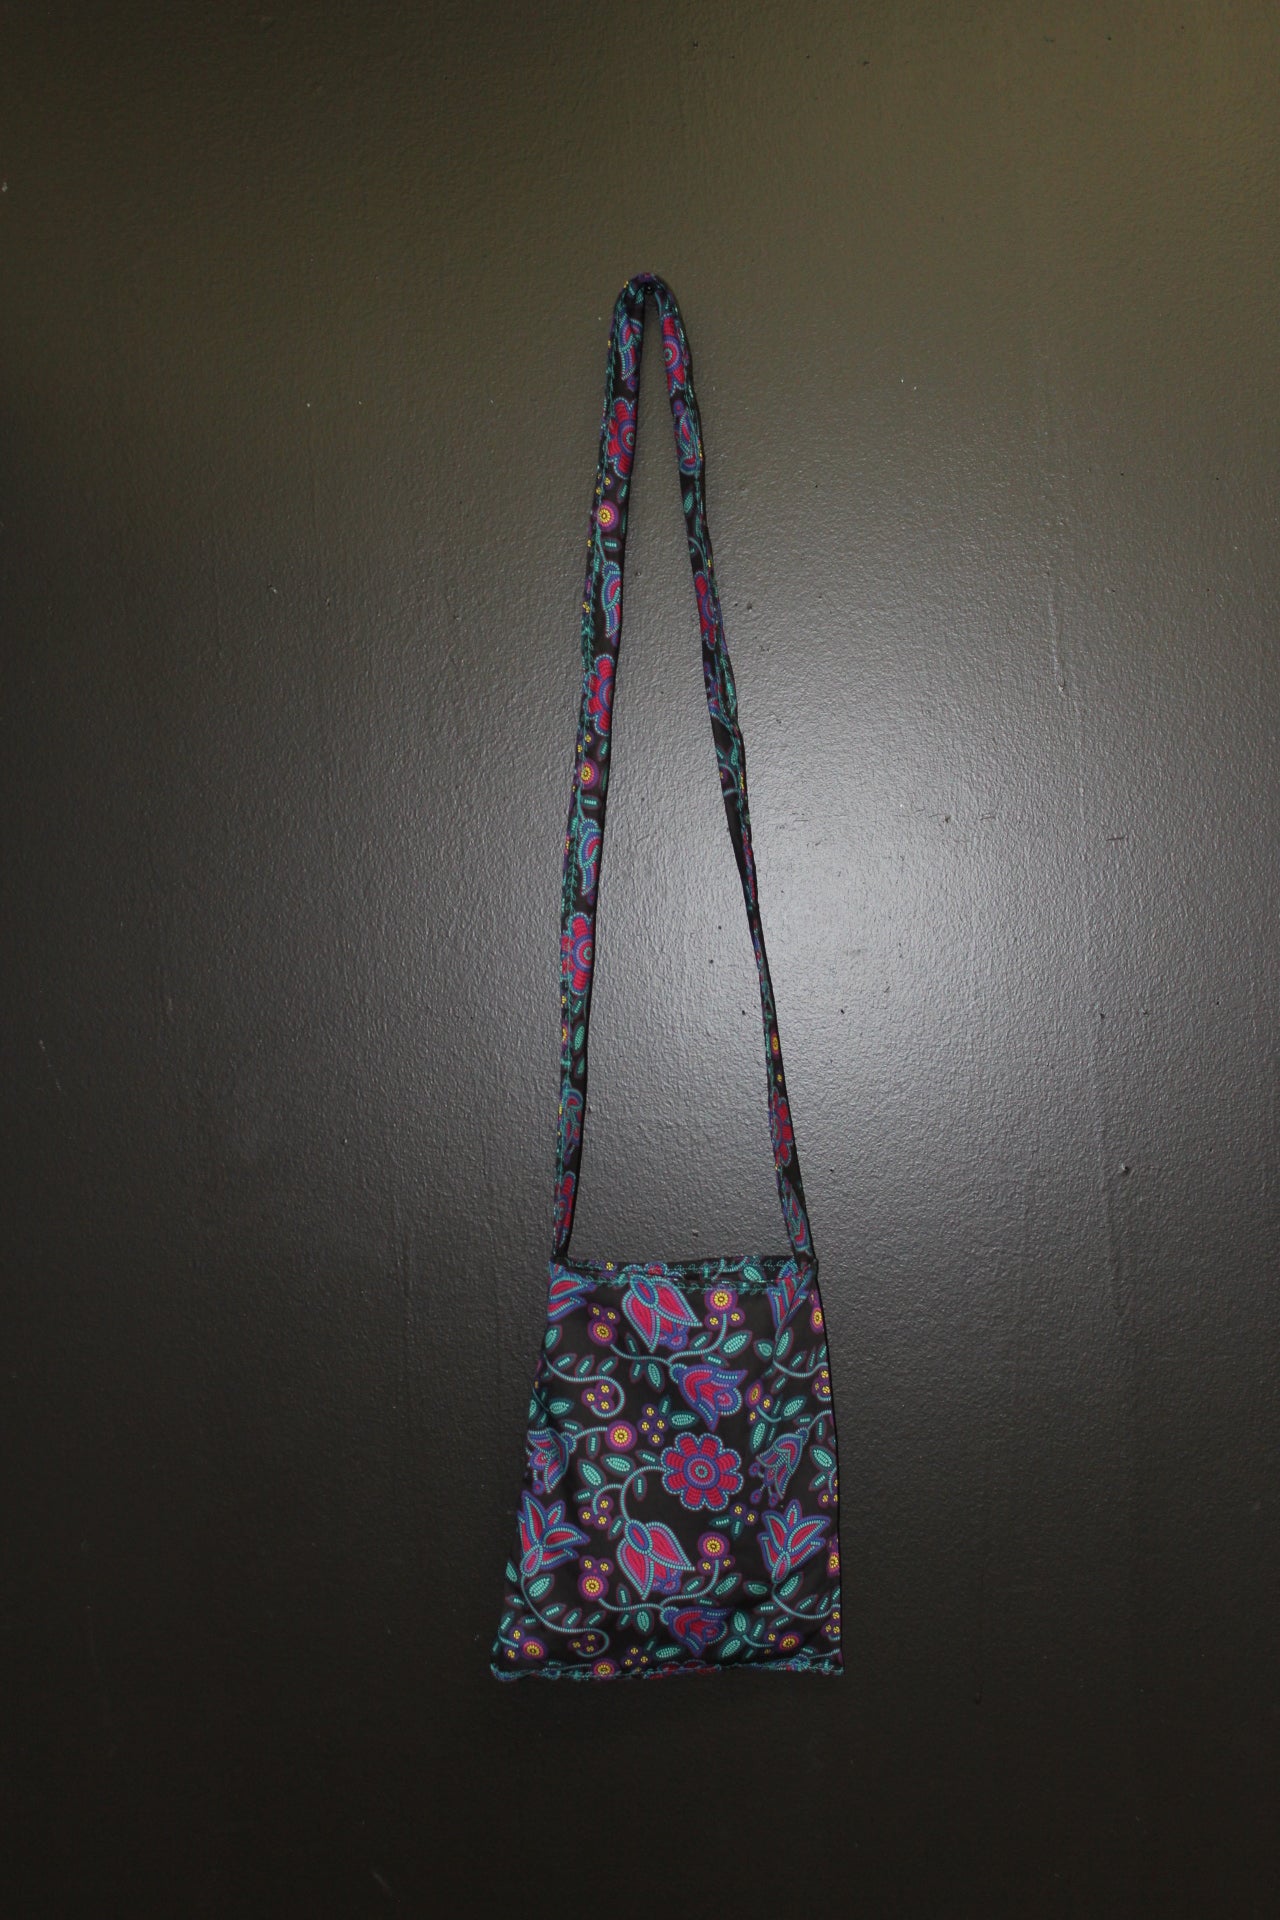 Beaded Nouveau Overlay Ribbon Skirt w/Bag